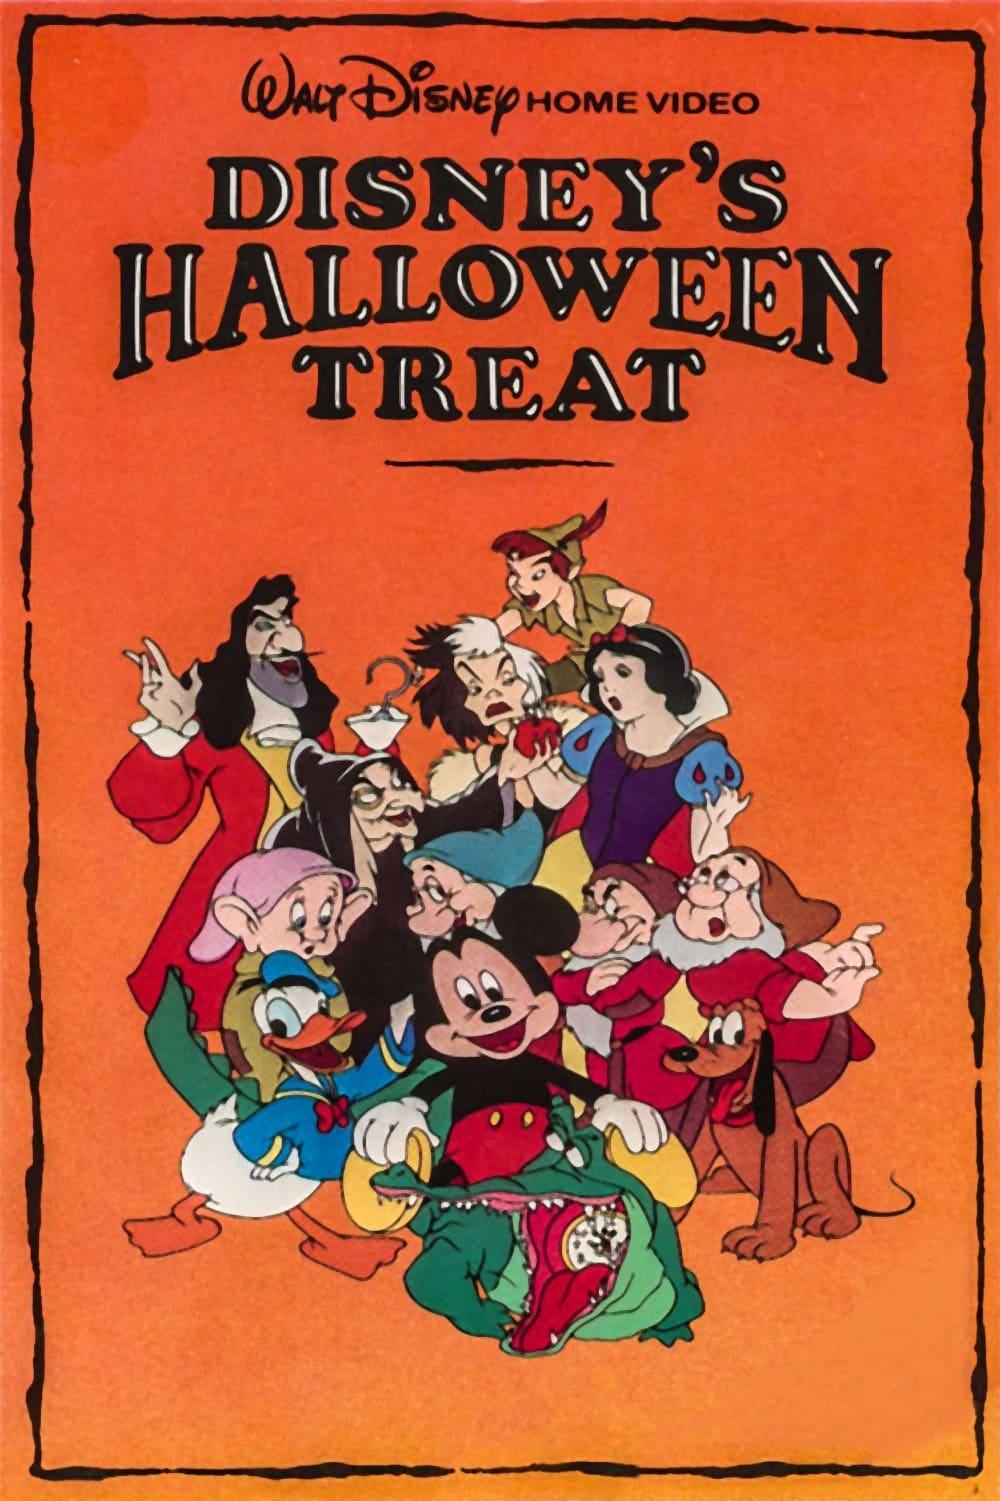 Disney's Halloween Treat poster